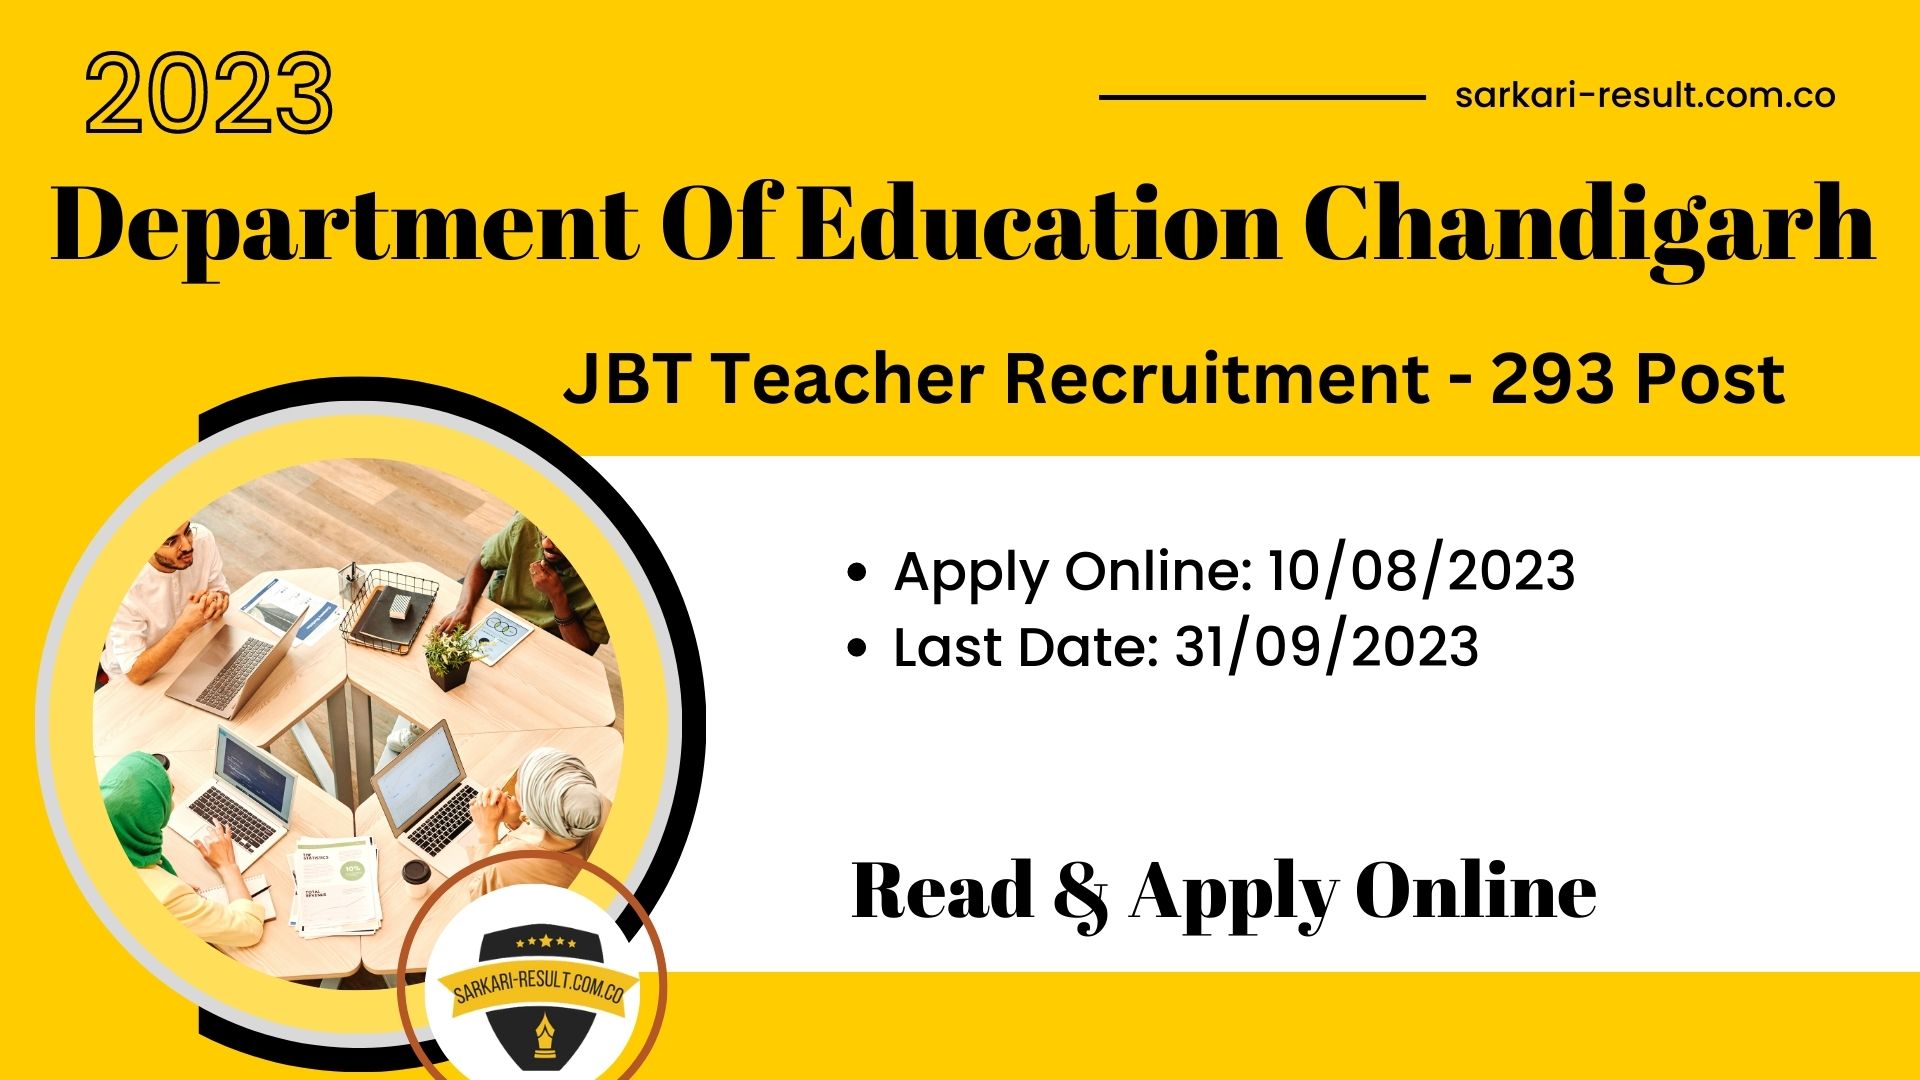 Chandigarh JBT Teacher Recruitment 2023 Apply Online for 293 Post